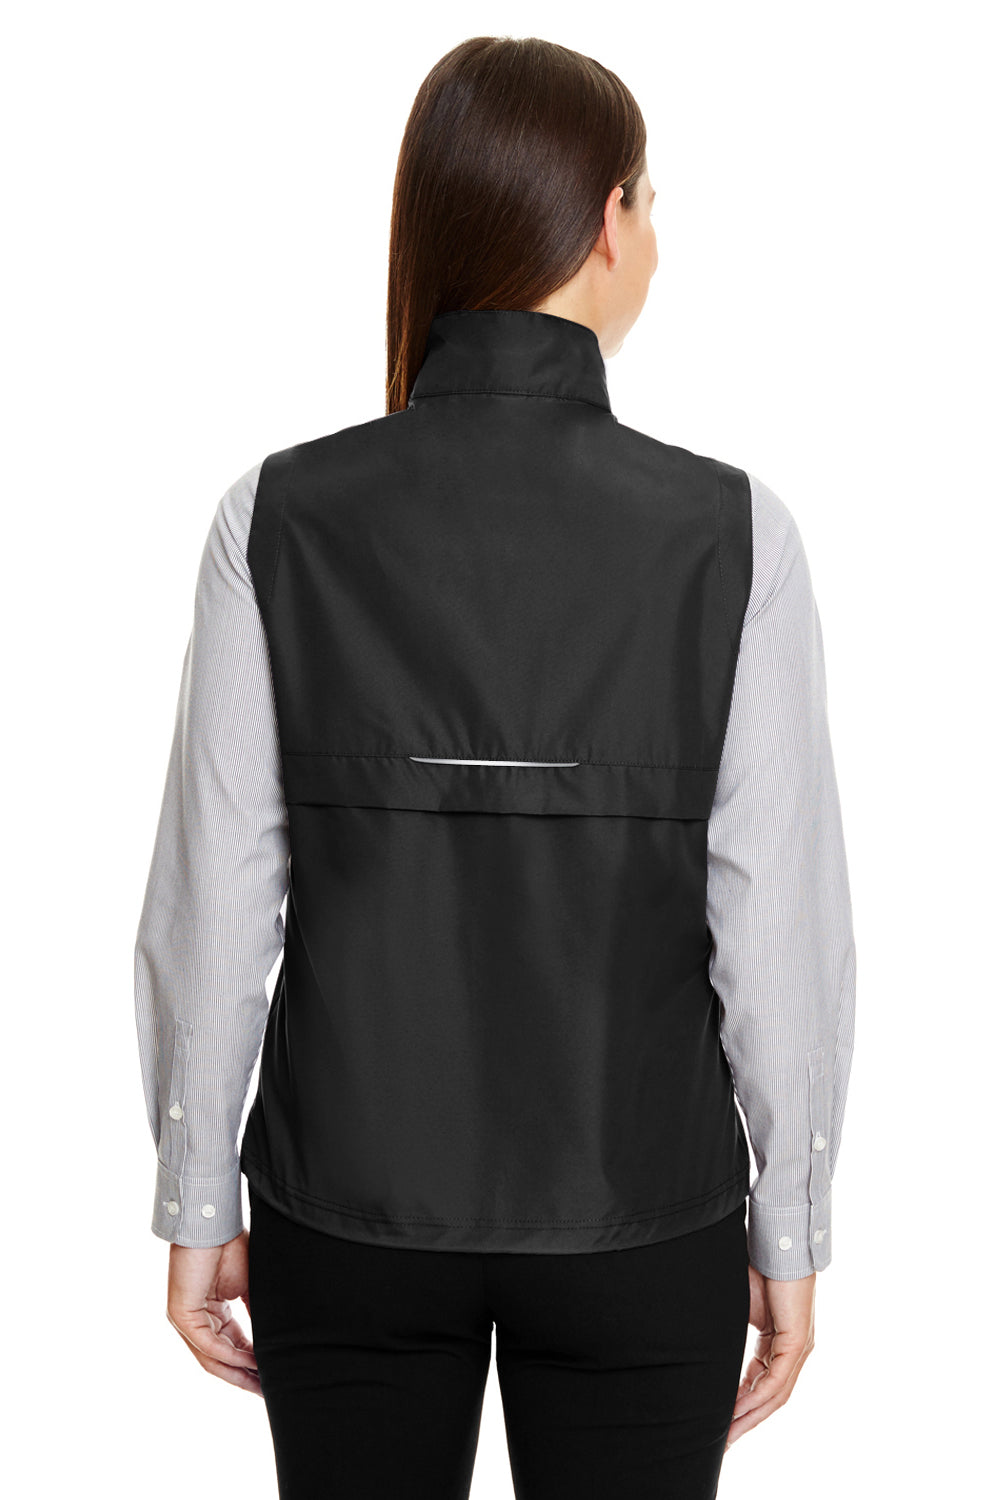 Core 365 CE703W Womens Techno Lite Water Resistant Full Zip Vest Black Back